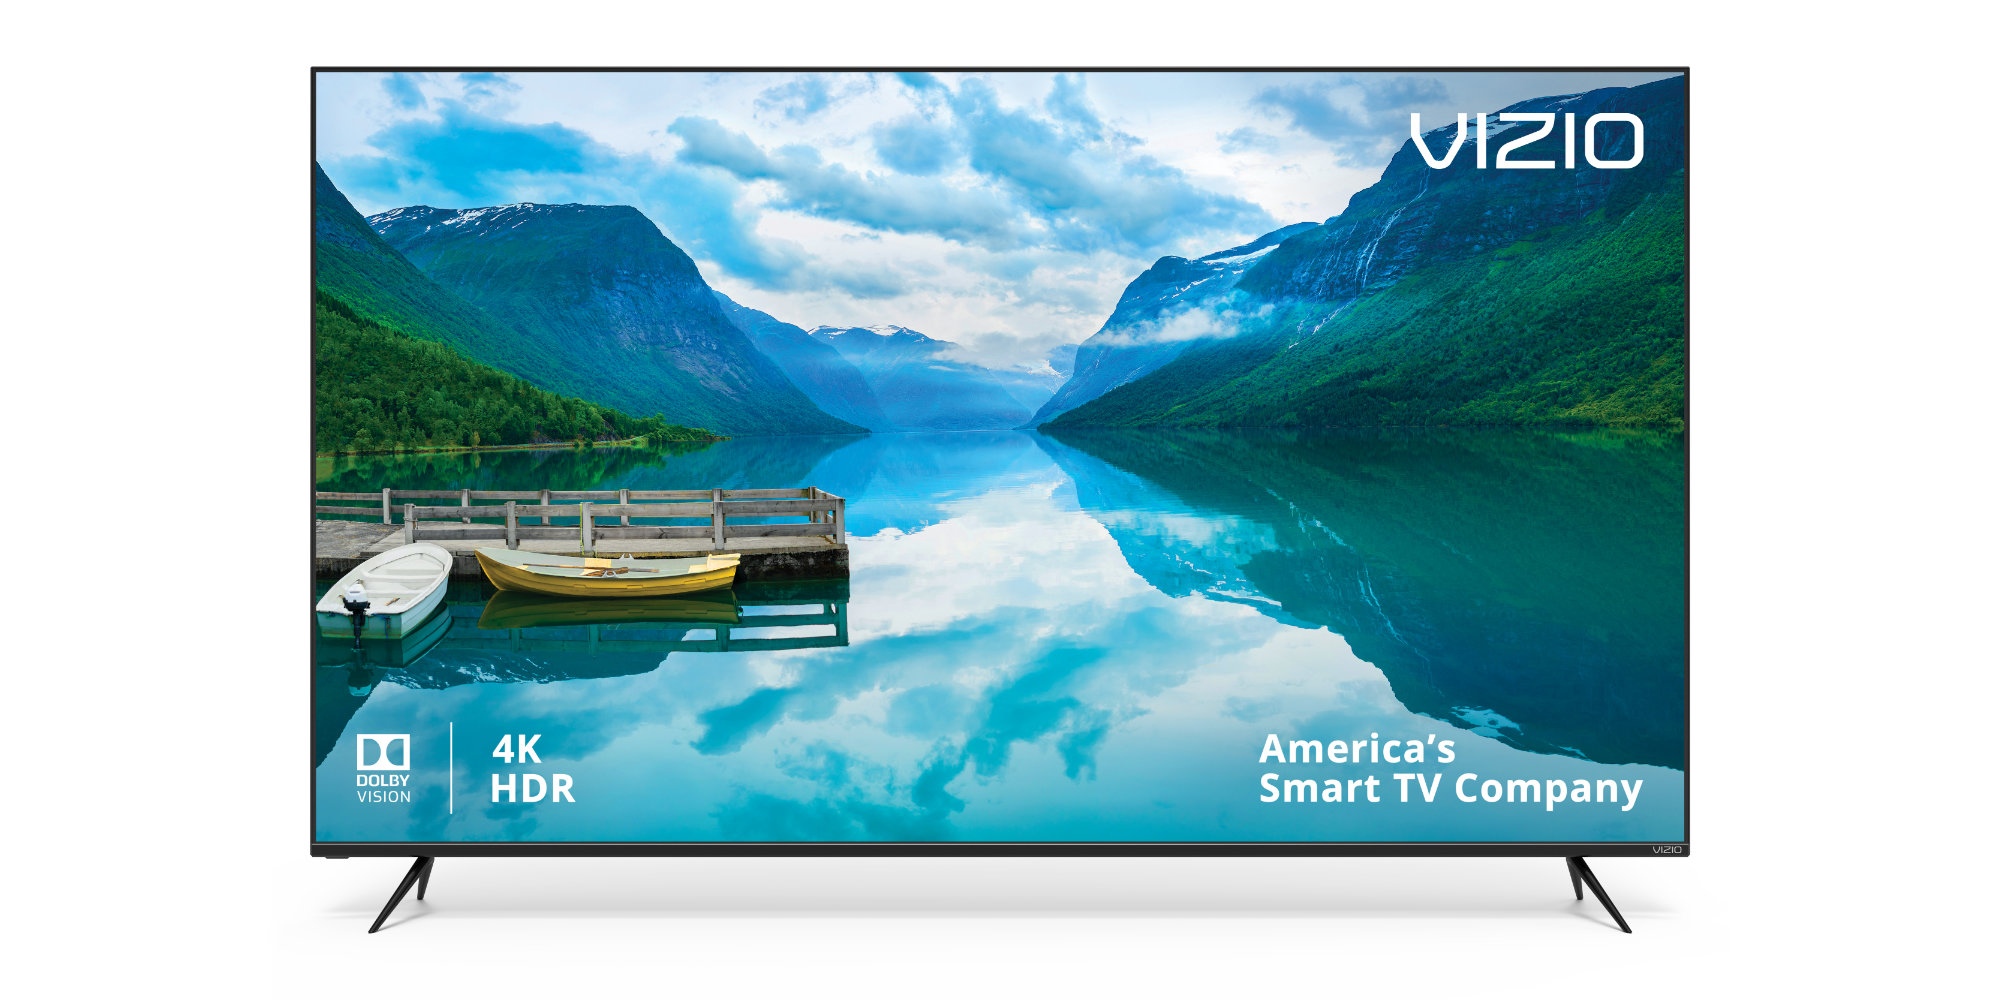 VIZIO's 65inch 4K HDR TV with Chromecast returns to $650 shipped (Reg